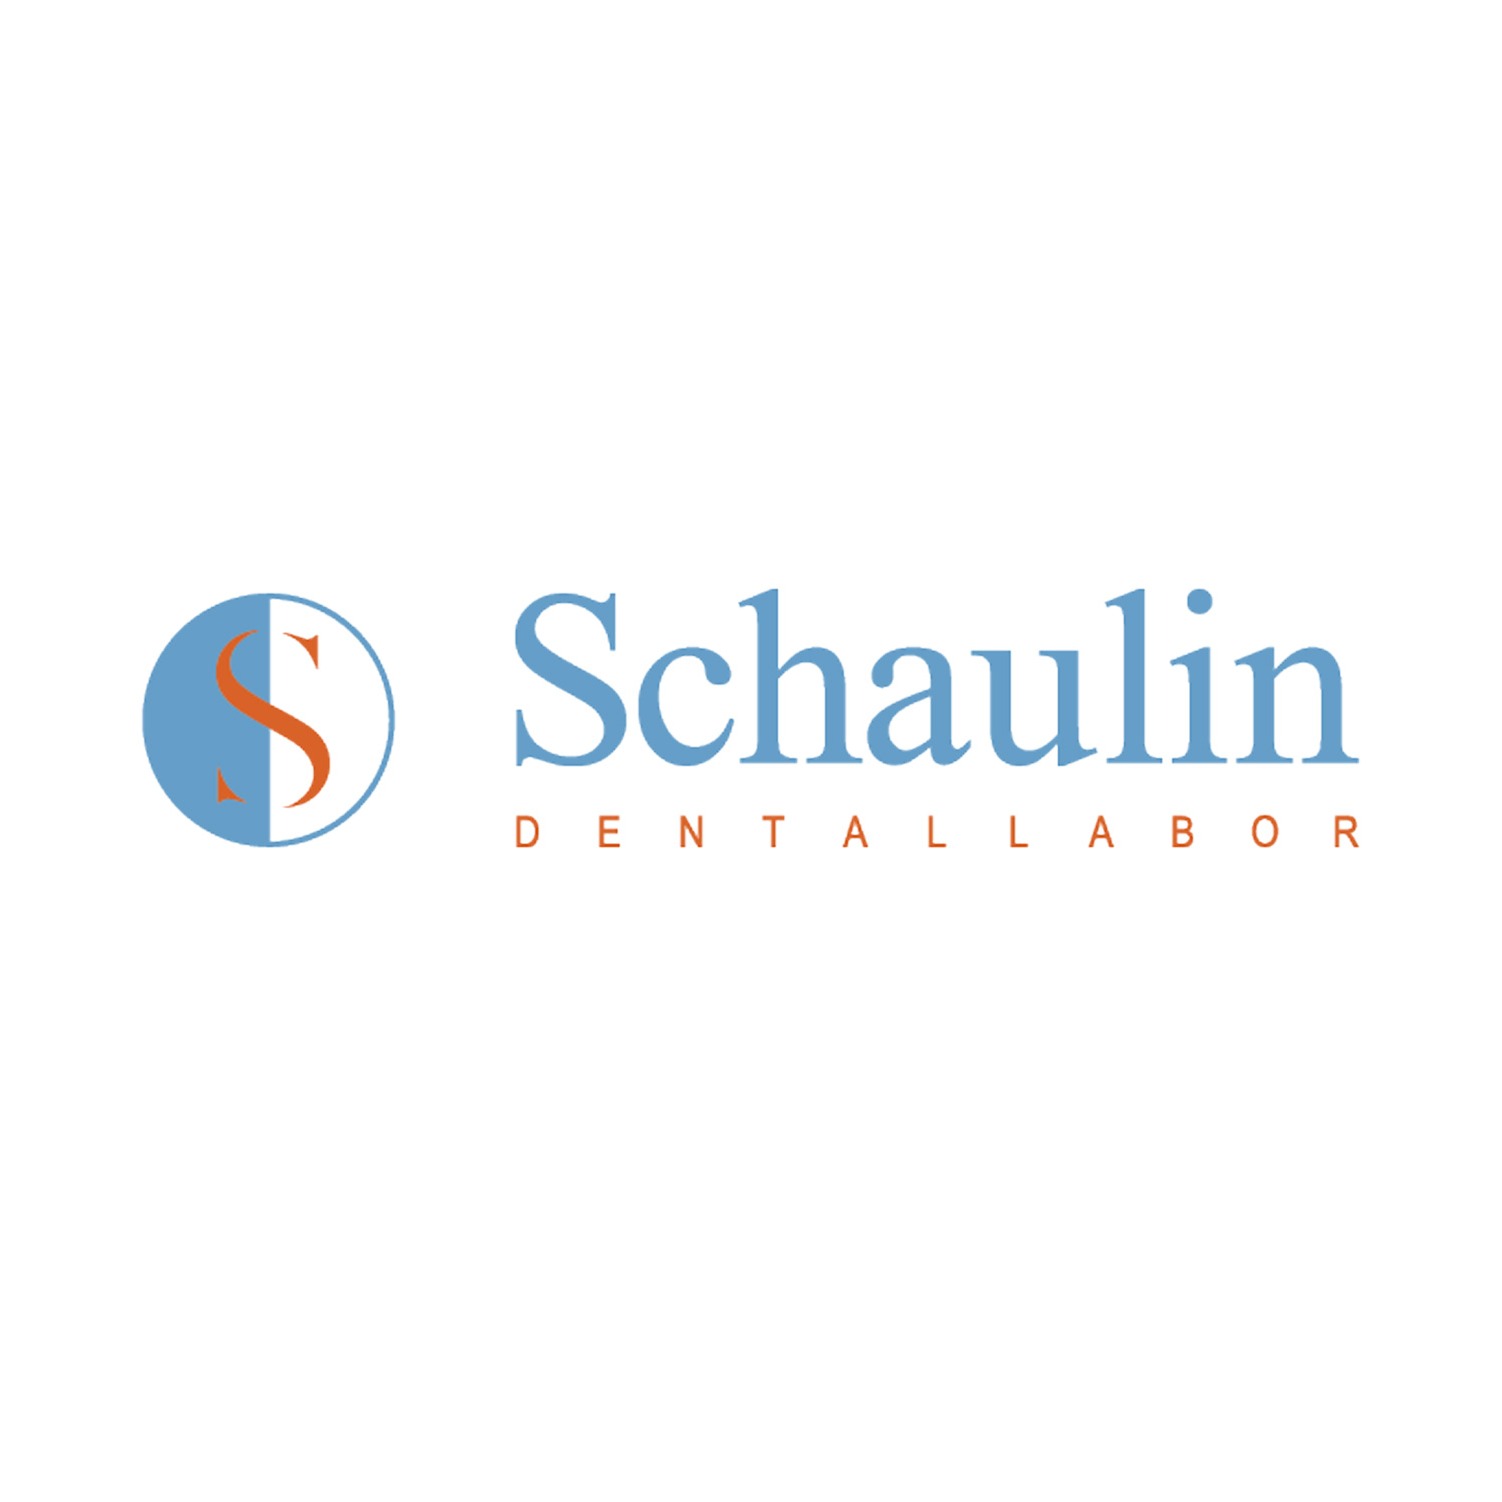 Schaulin Dentallabor - Dental Laboratory - Bern - 031 382 23 23 Switzerland | ShowMeLocal.com